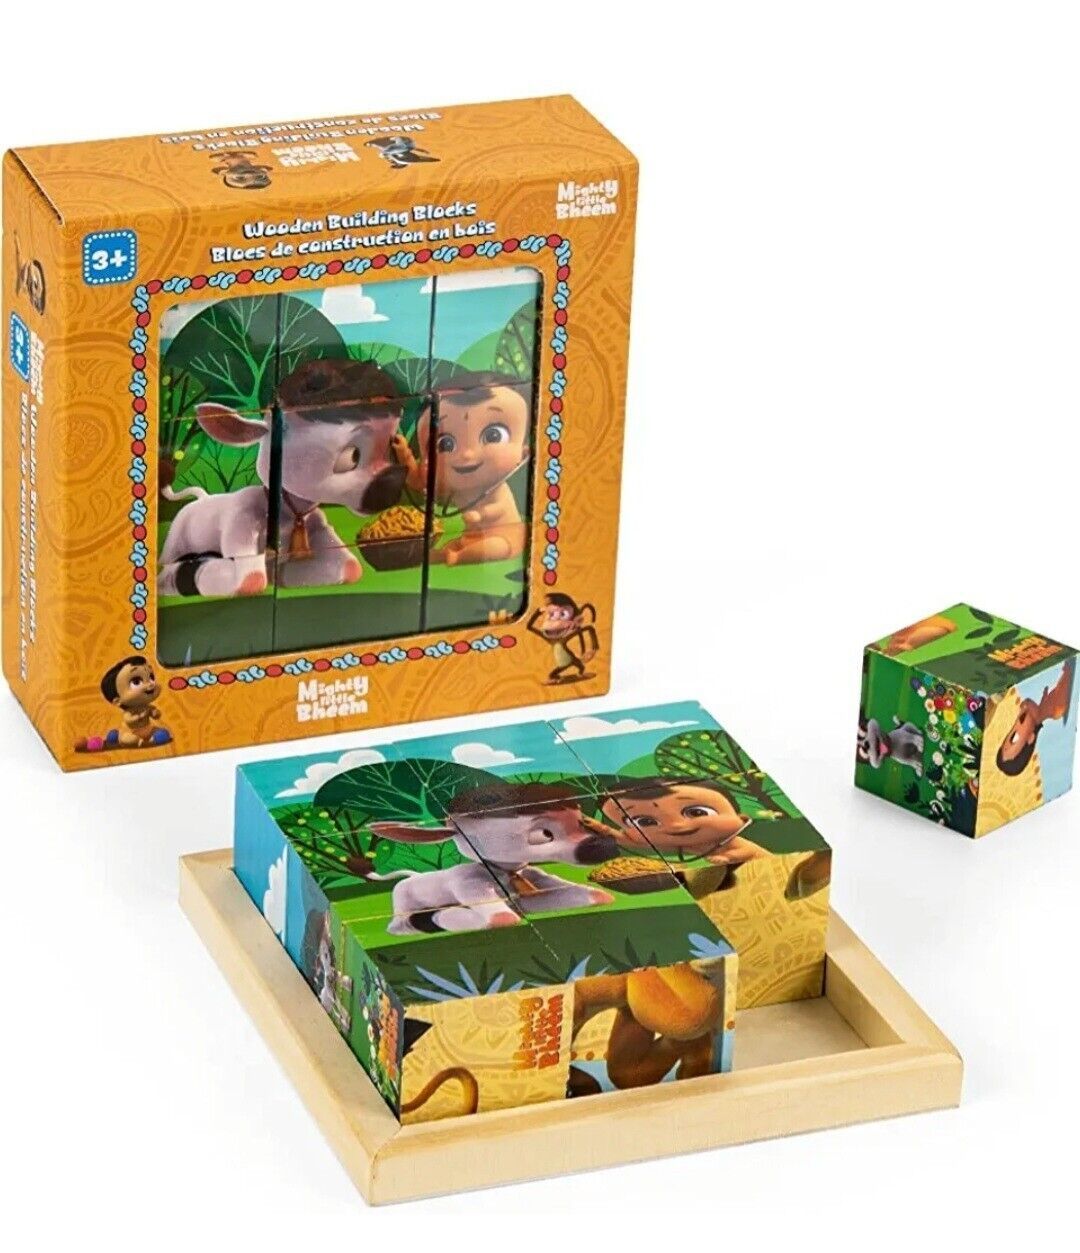 Kitcheniva Wooden Blocks Toy Set 3+Kids Bricks Game